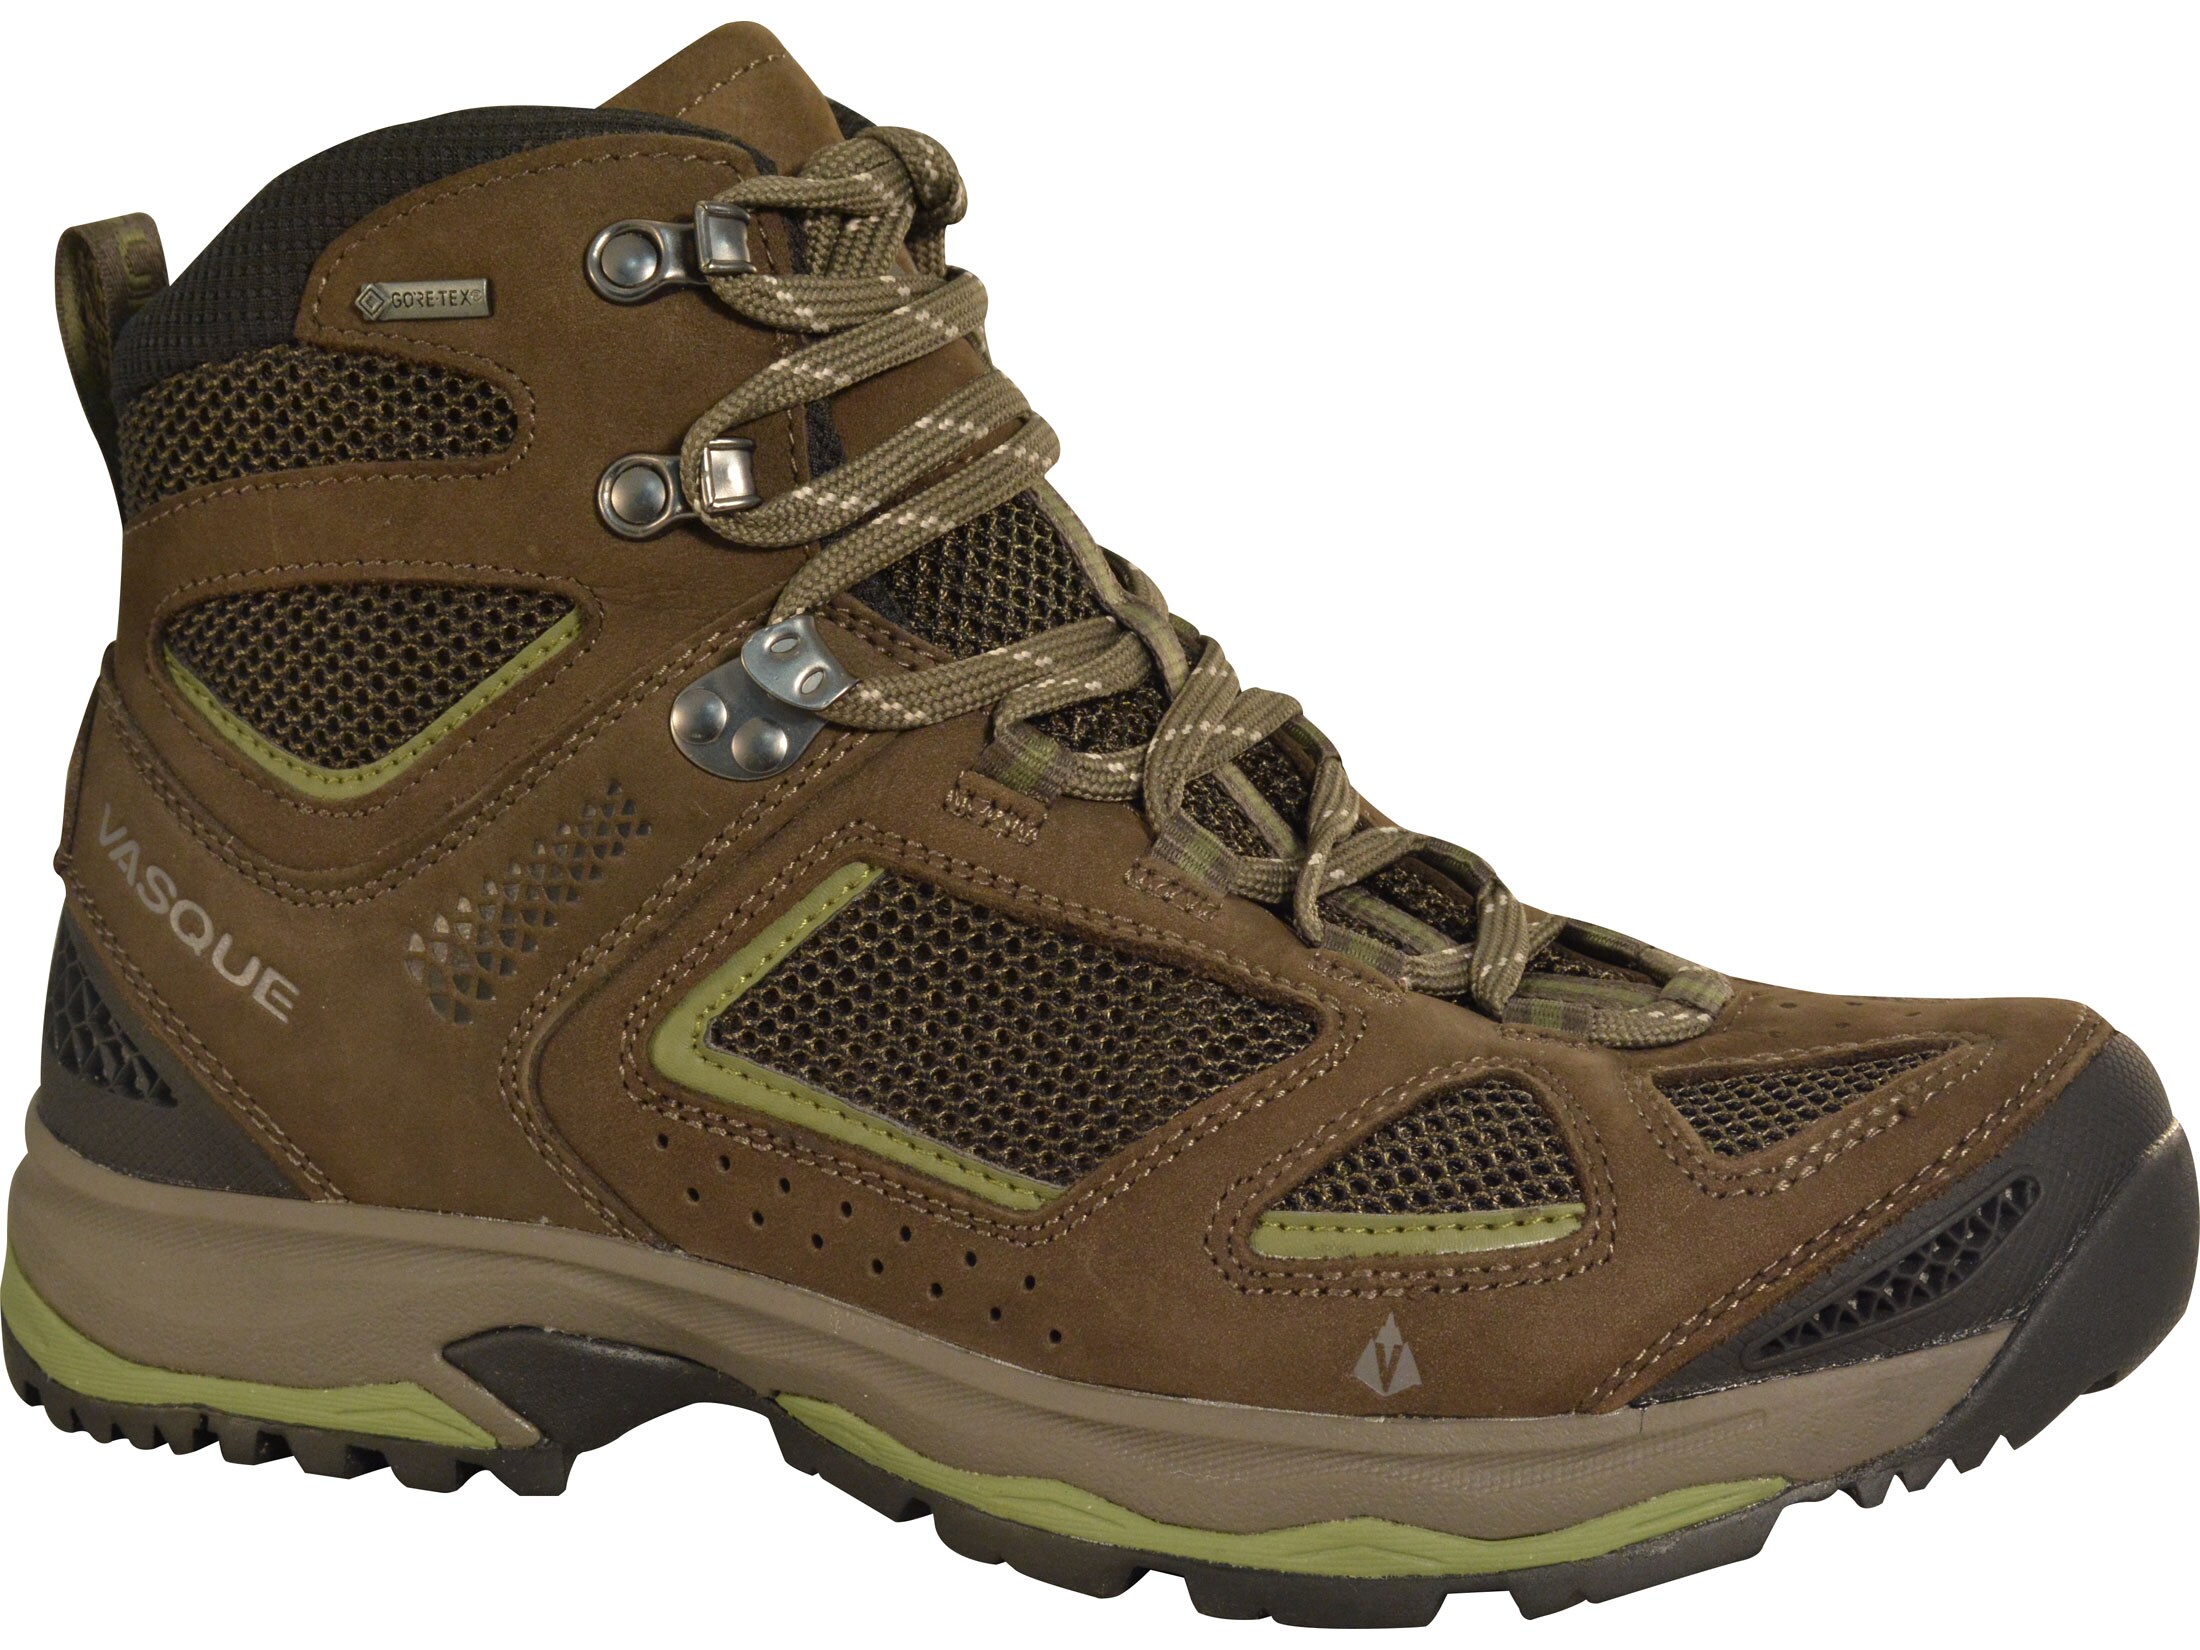 Vasque Breeze III GTX 5 Waterproof GORE-TEX Hiking Boots Leather/Nylon